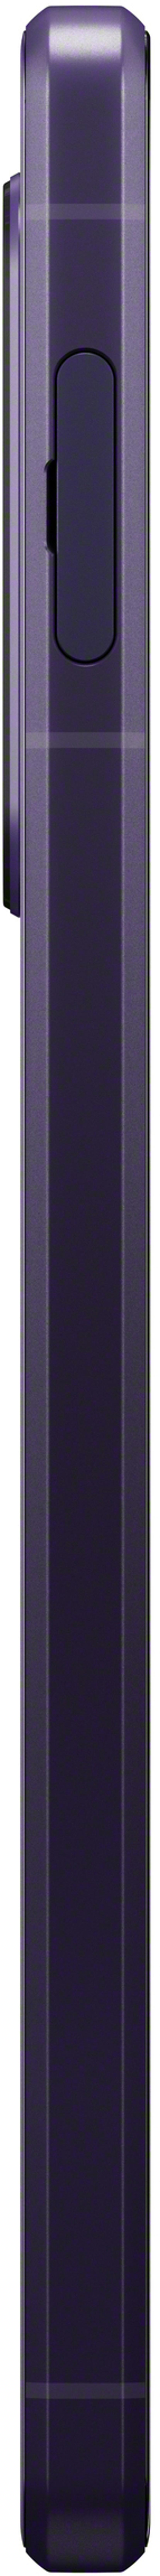 Sony XPERIA 1 III + WH-1000XM3 256GB Dual-SIM Lila